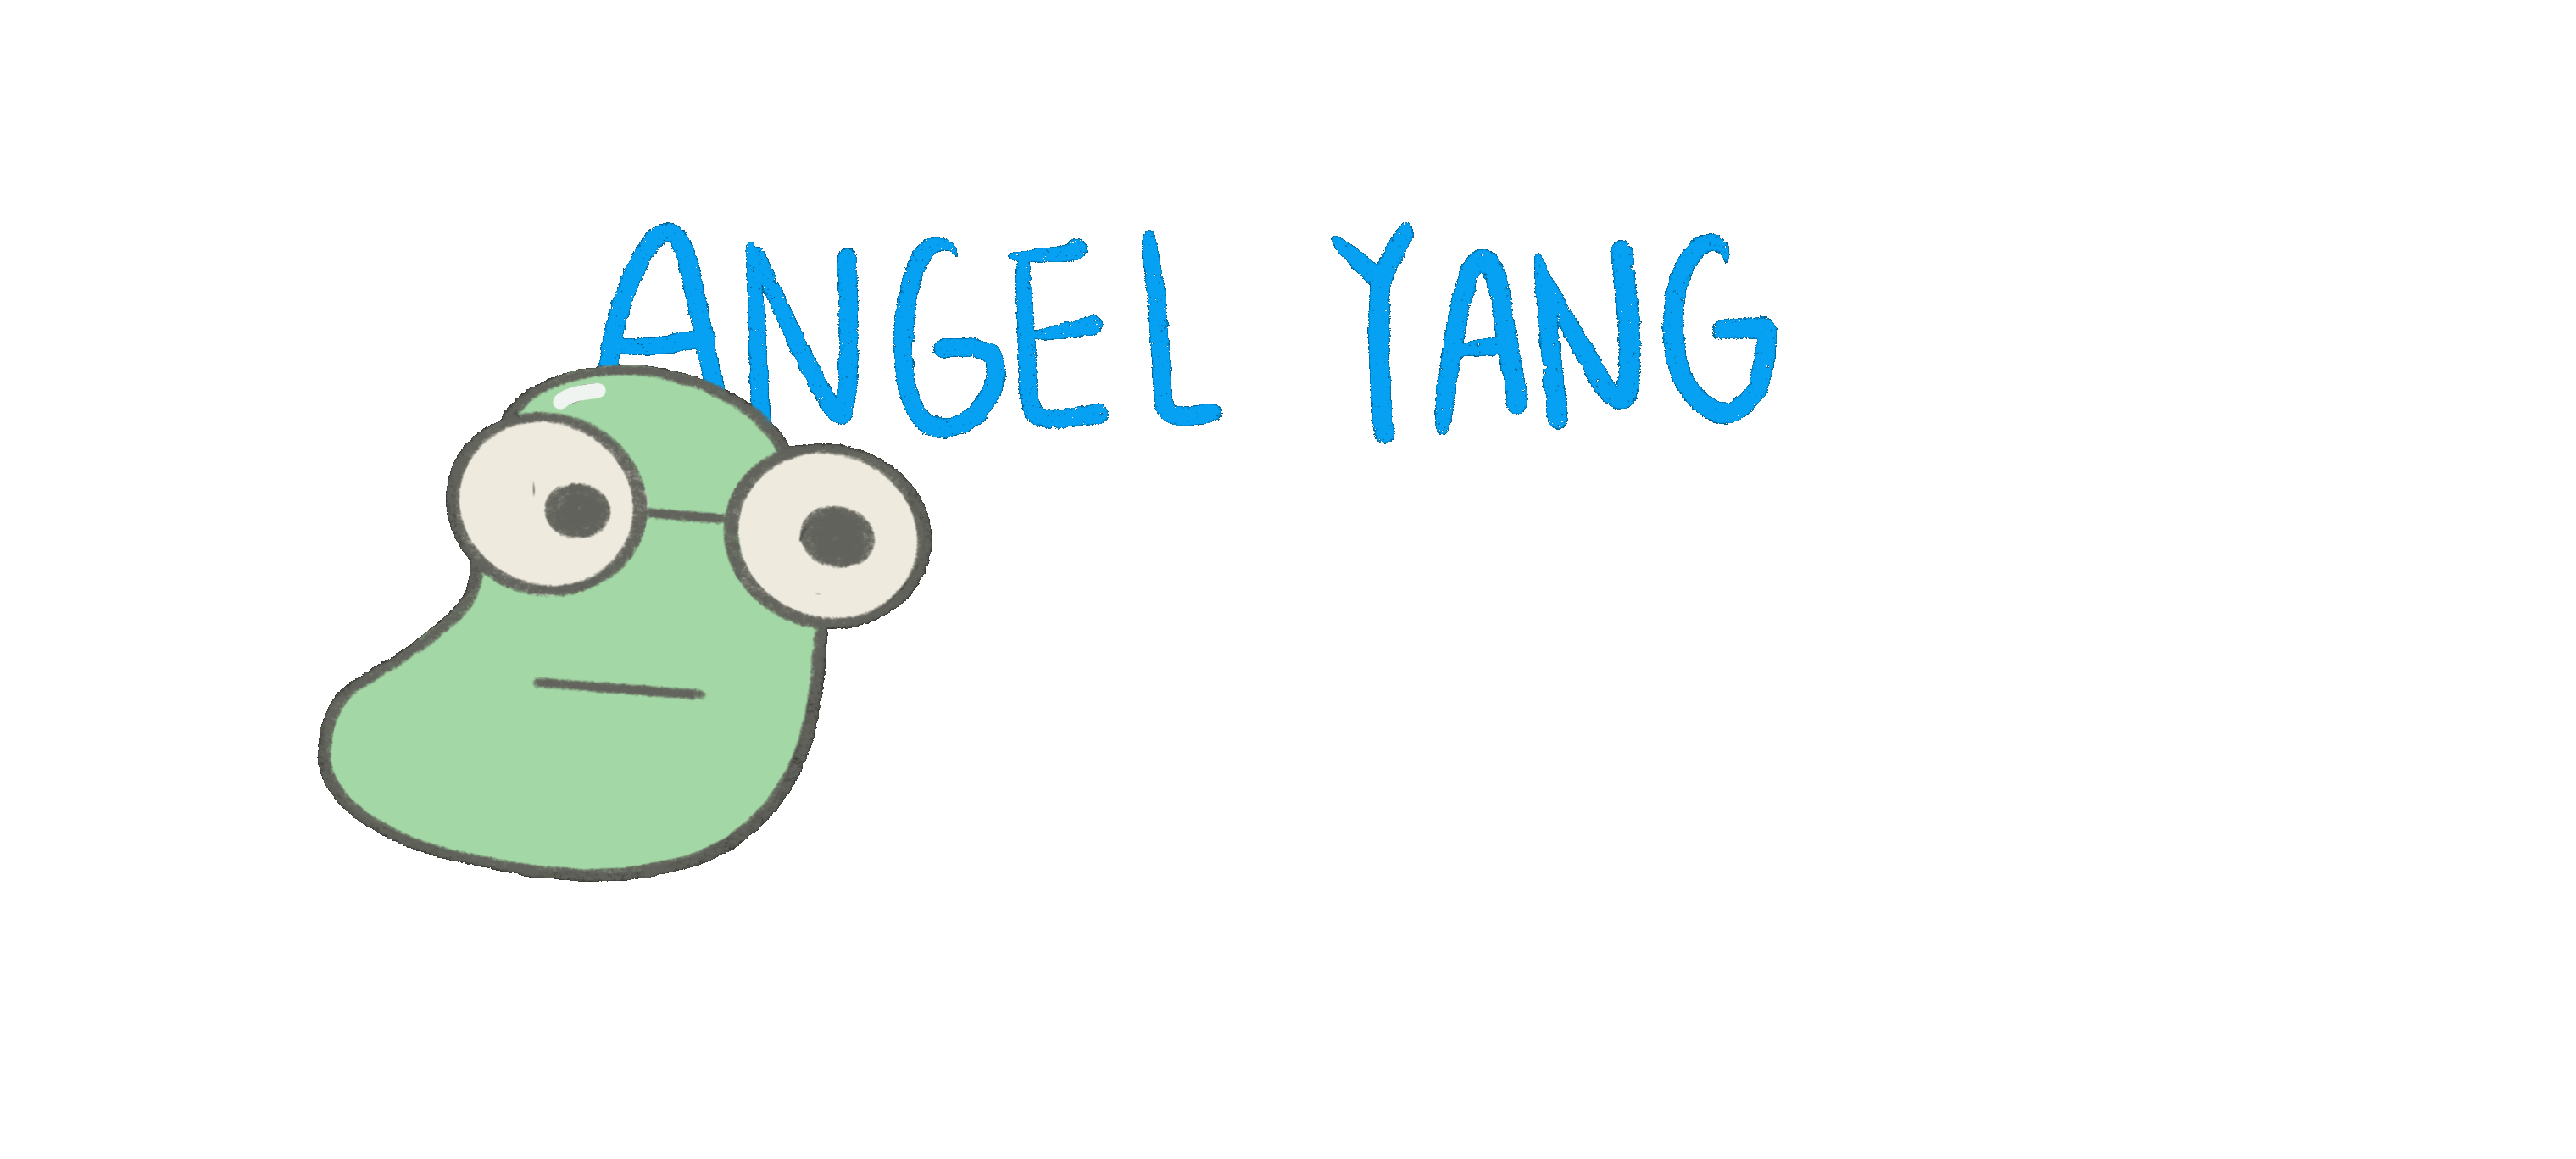 Angel Yang 